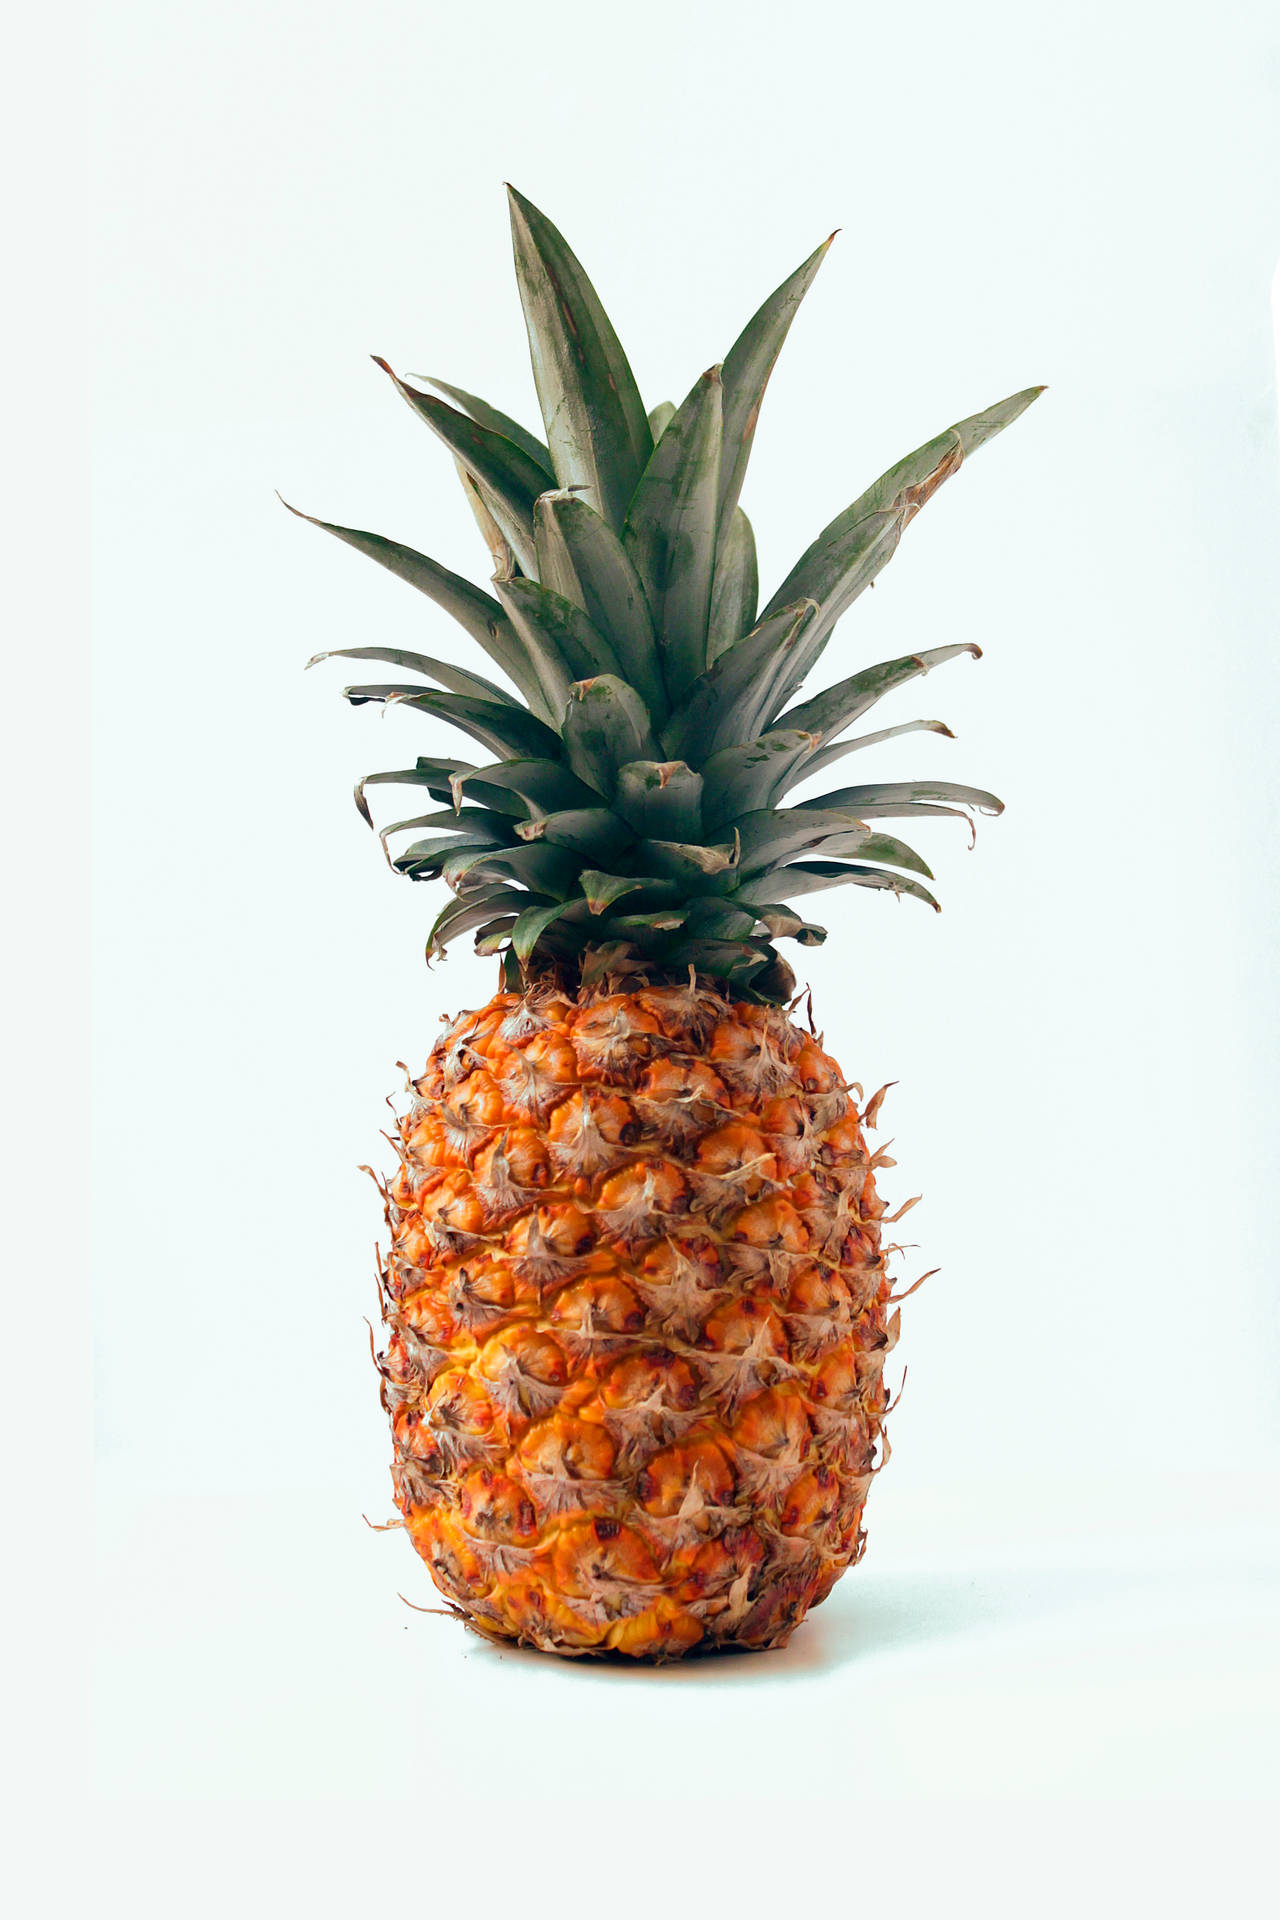 Pineapple Fruit Yellow Body Background